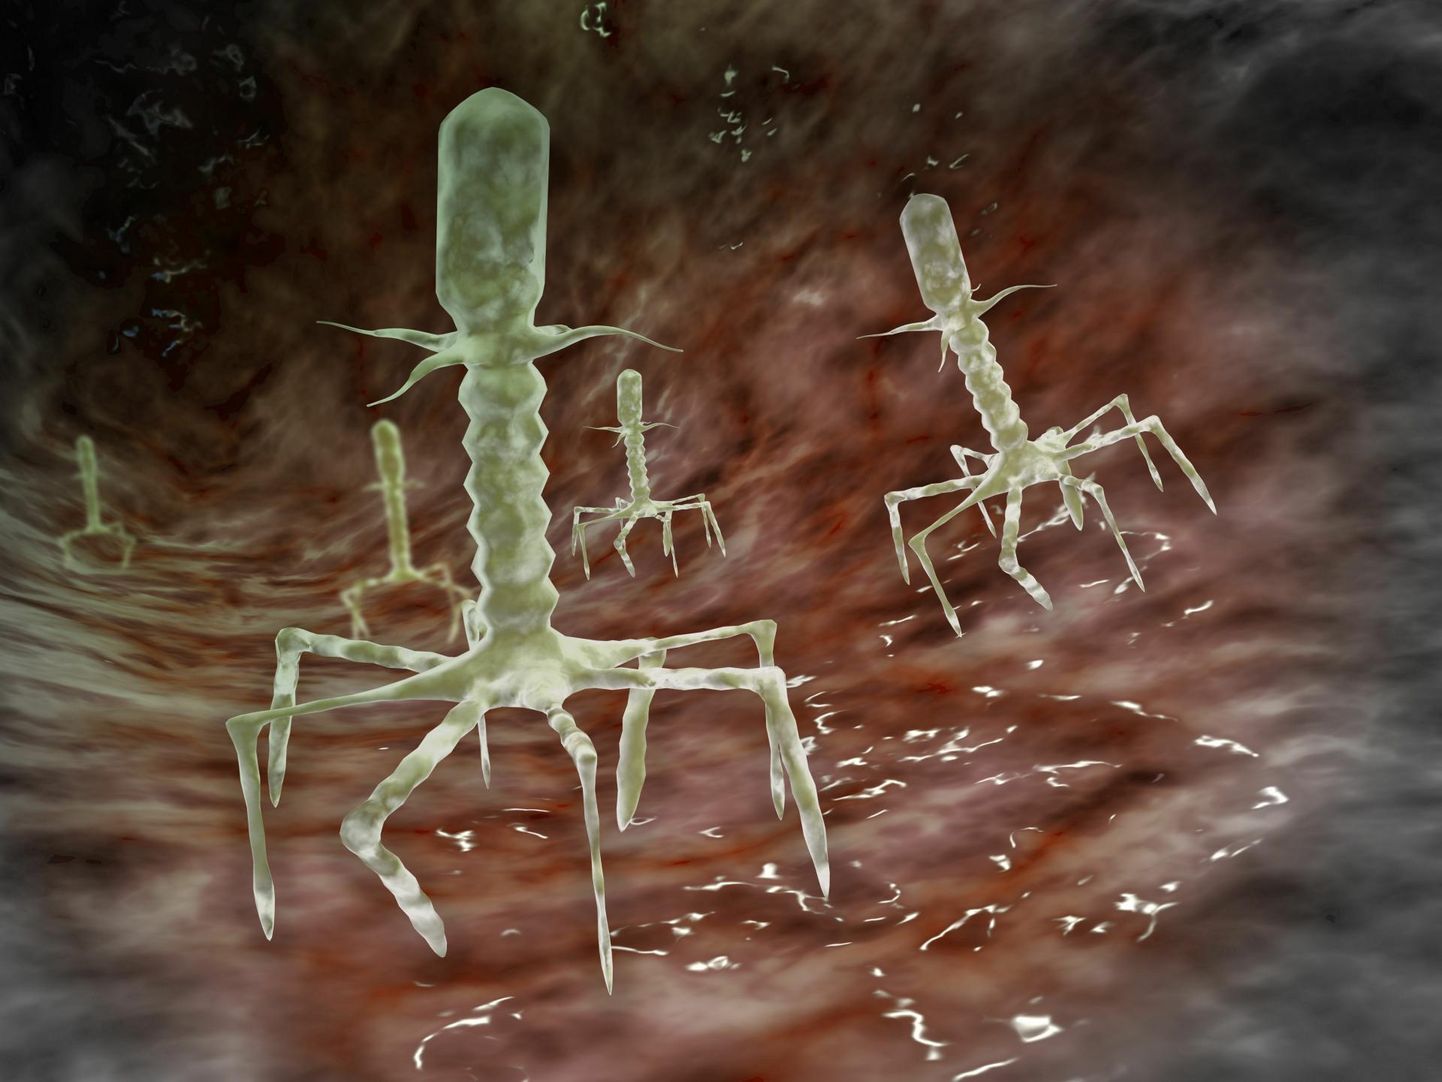 Mikroskoopiline vaade bakteriofaagidele bakteri pinnal.